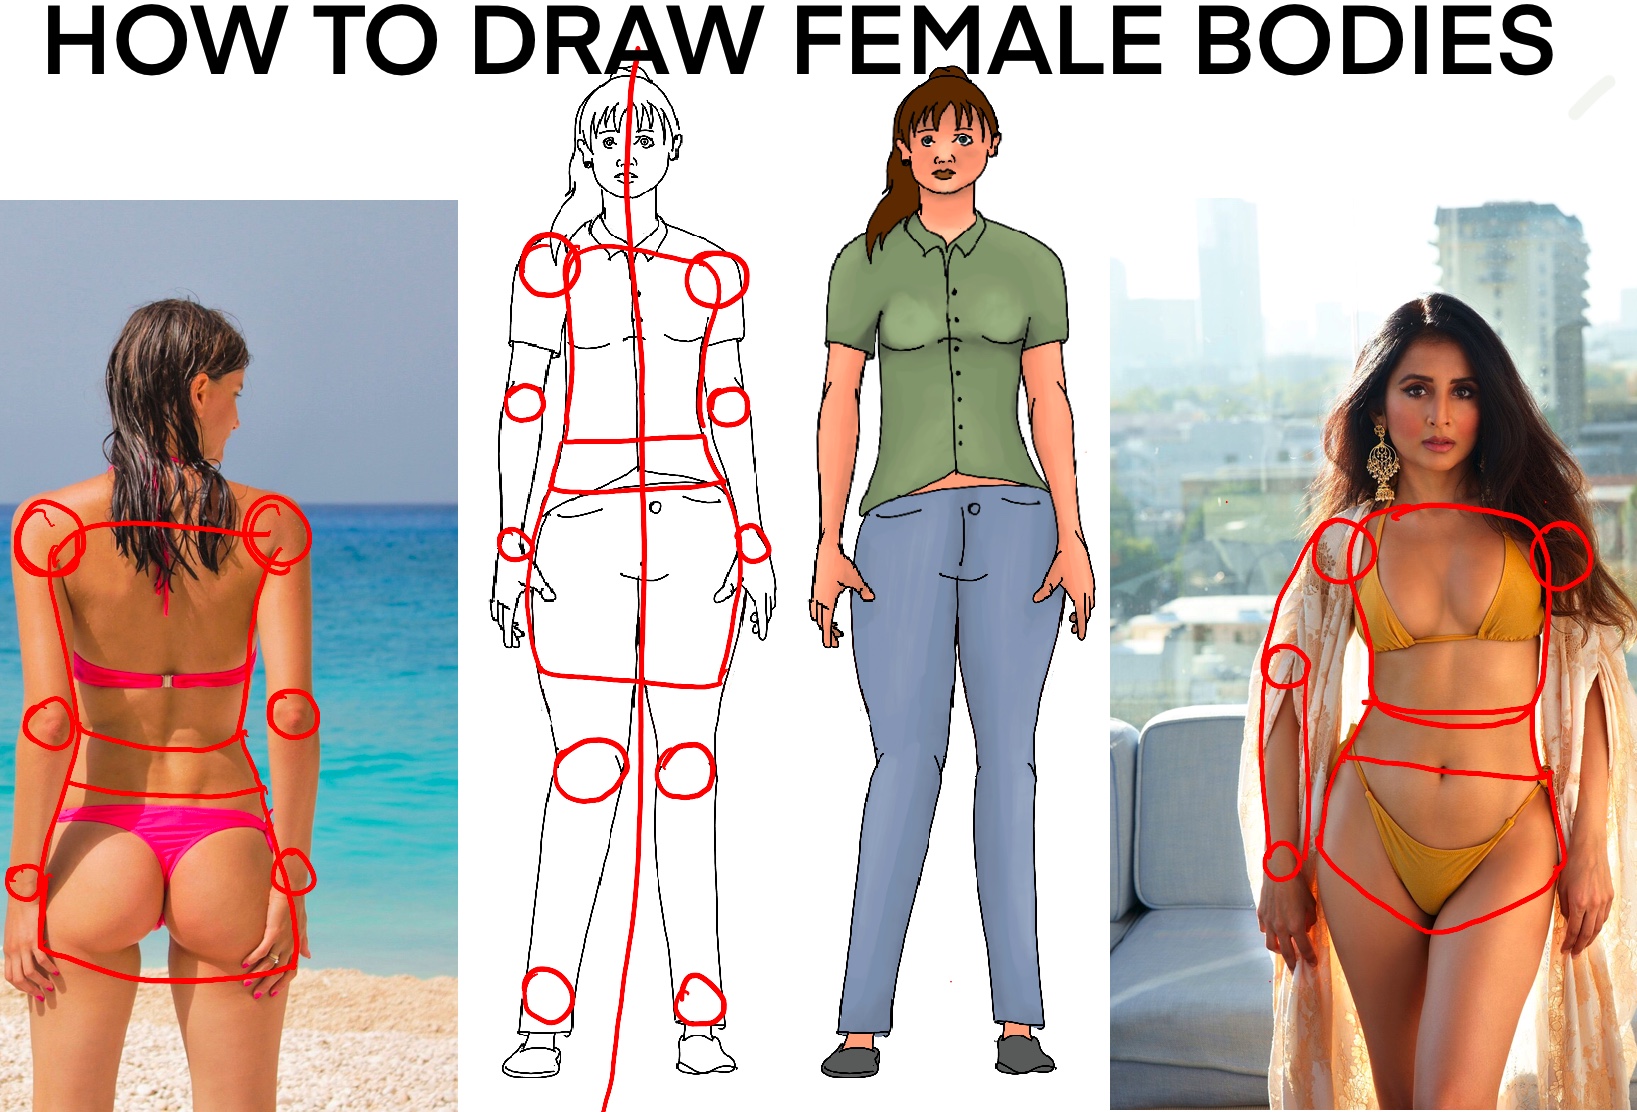 How to Draw Female Bodies